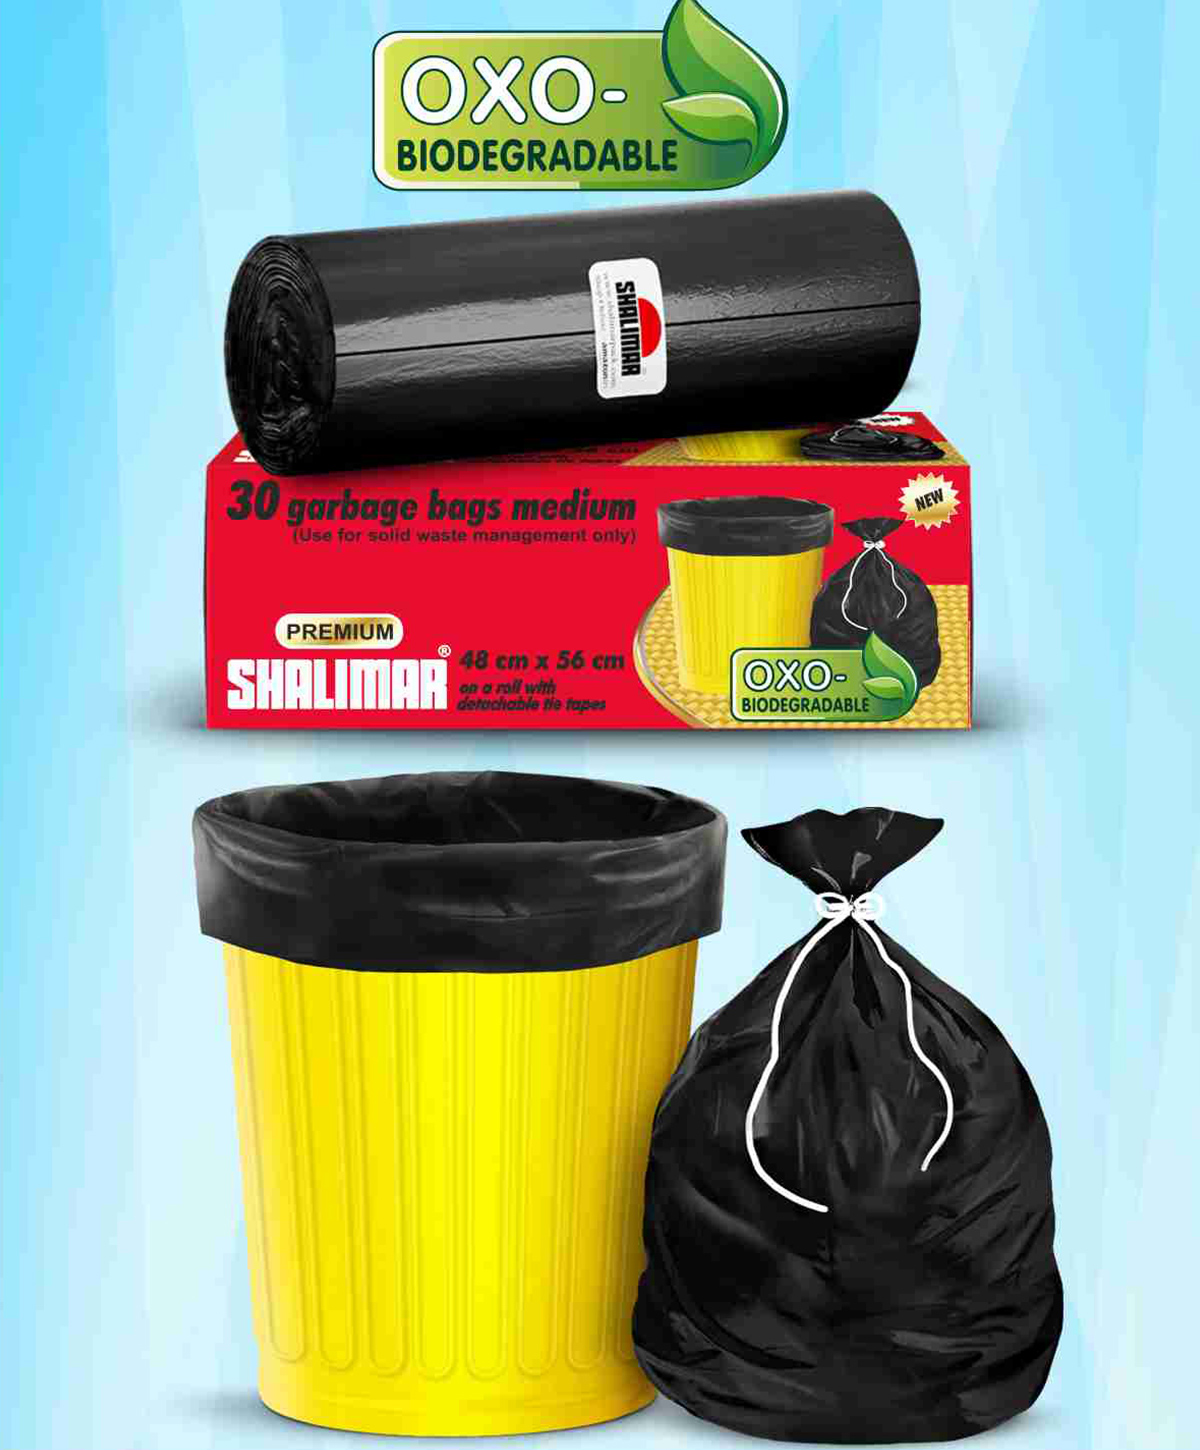 Buy OXO Biodegradable Garbage Bags Online Dustbin Bags Manufacturer   Shalimar